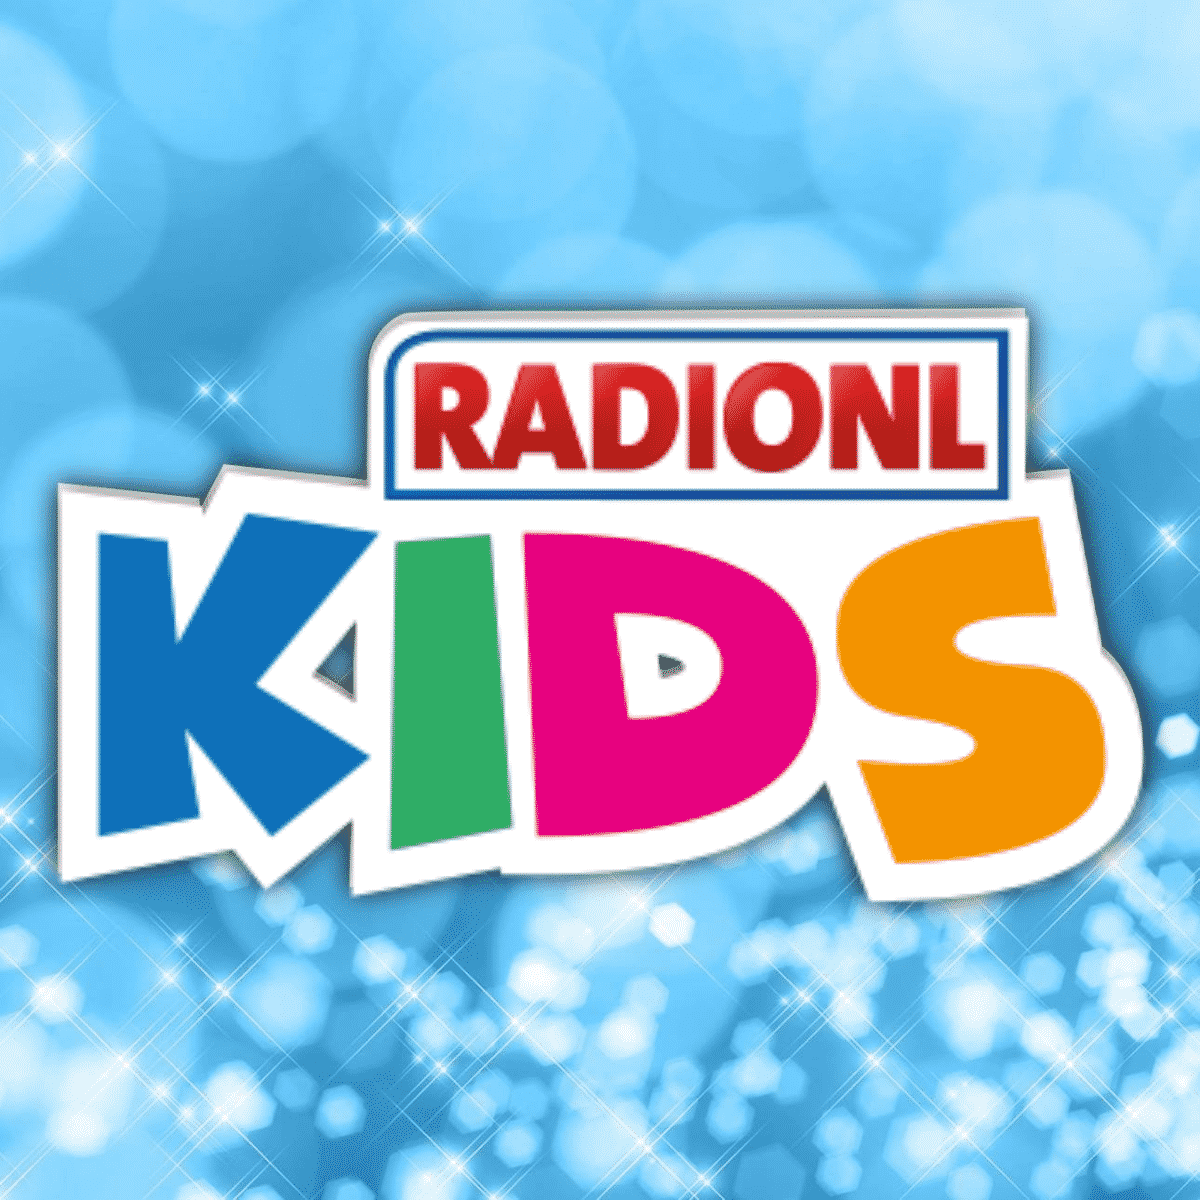 RadioNL Kids